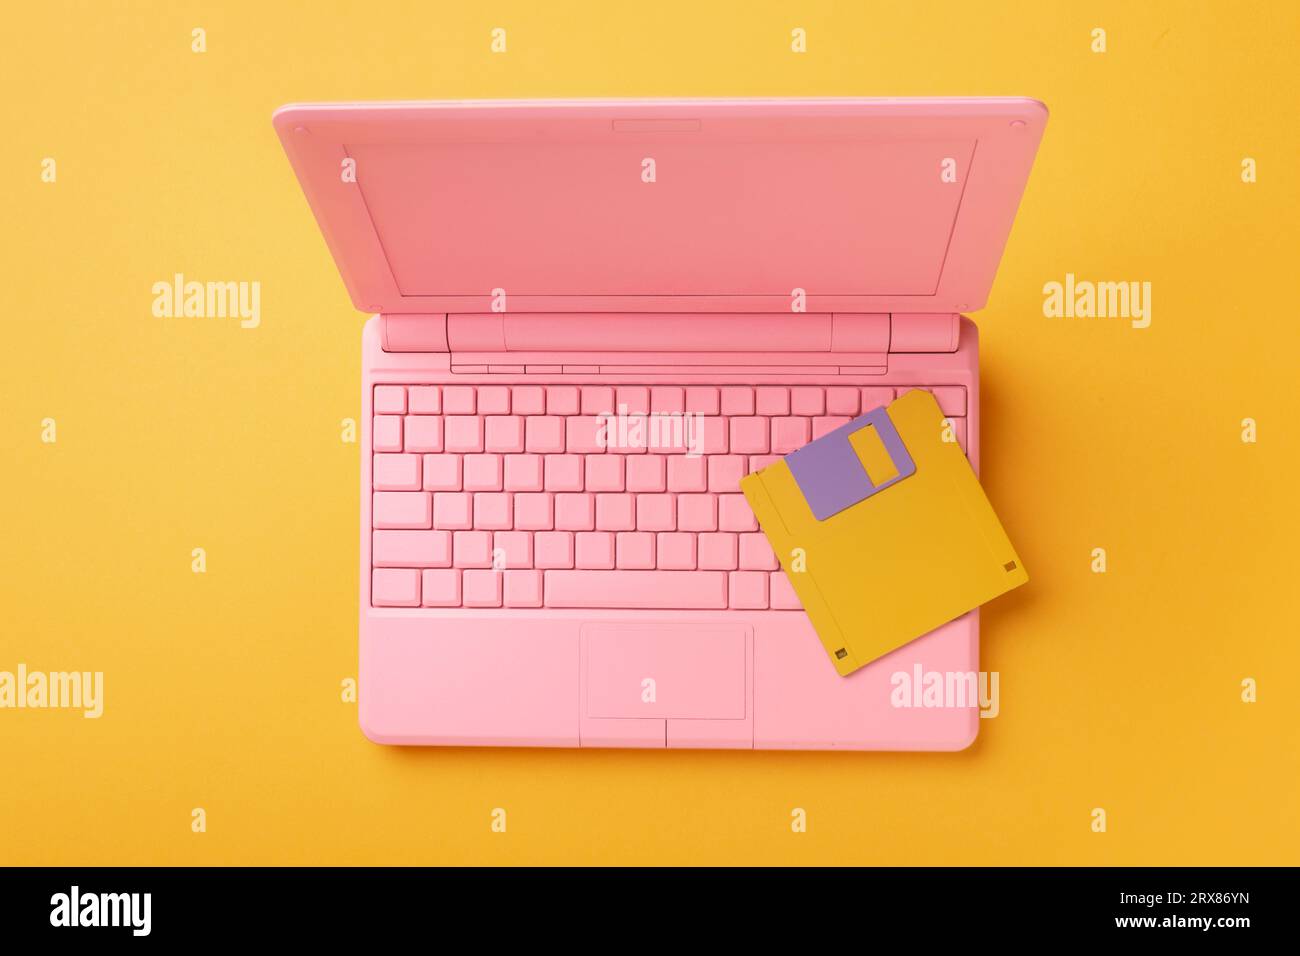 Farbiger pinColored Pink Laptop mit heller Diskette, Modernität Concept.k Laptop mit heller Diskette, Modernität Concept. Hochwertige Fotos Stockfoto